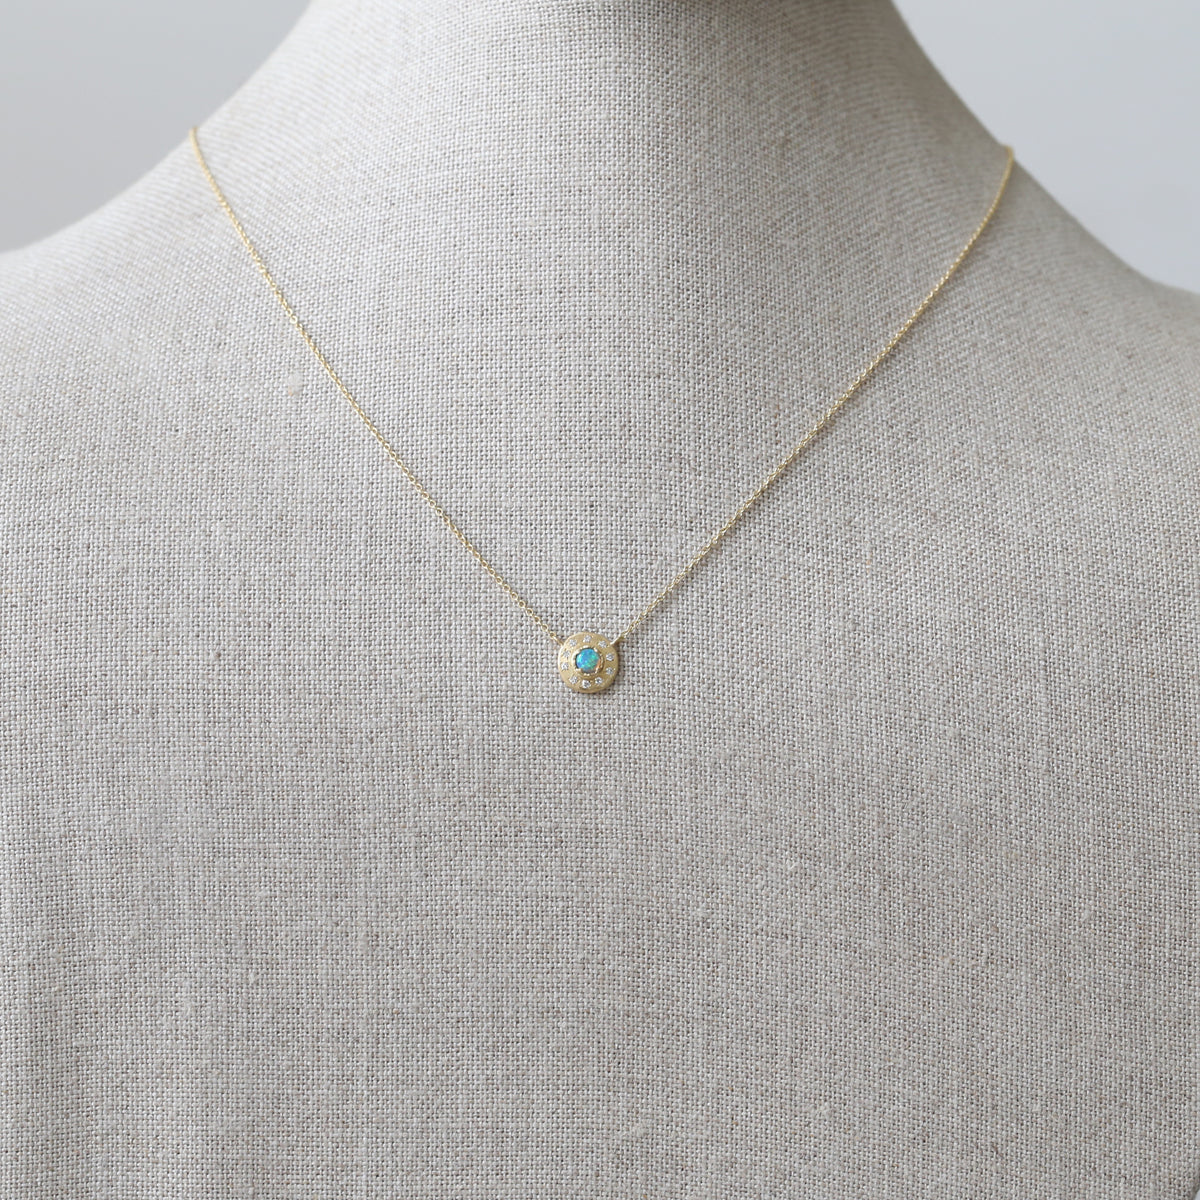 Opal disc necklace